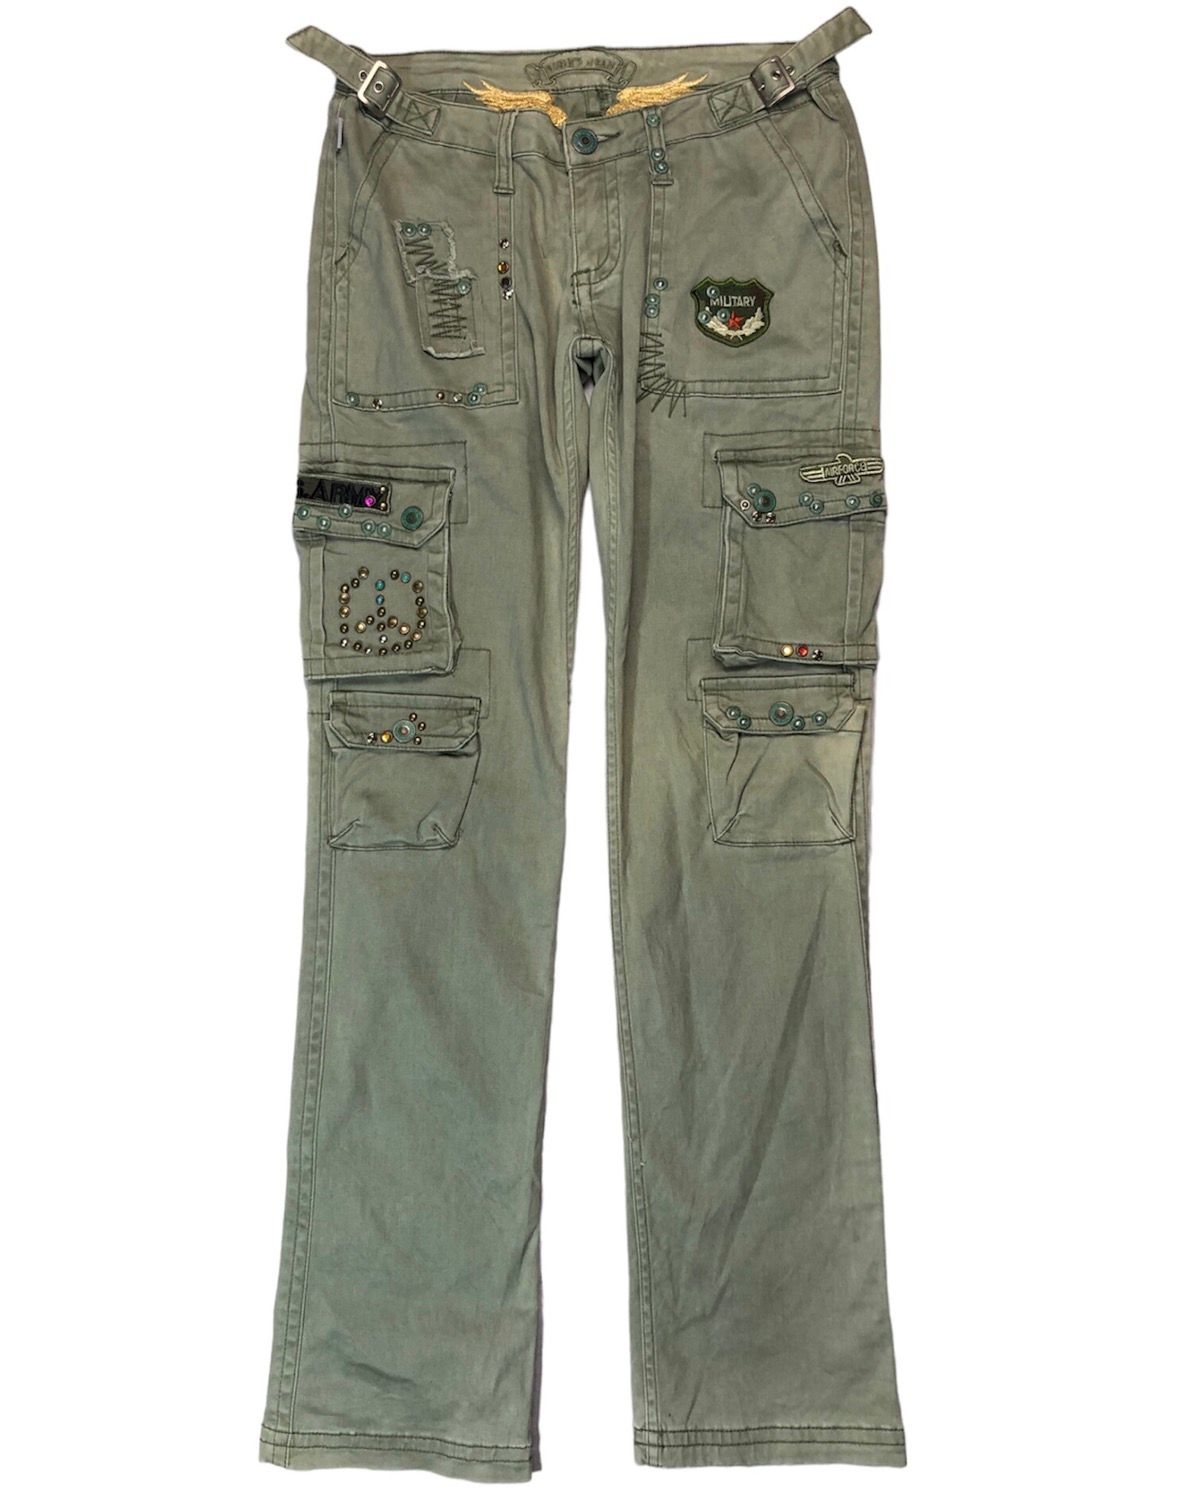 Robins Jeans Vintage Robins Jean studded multipocket pants | Grailed